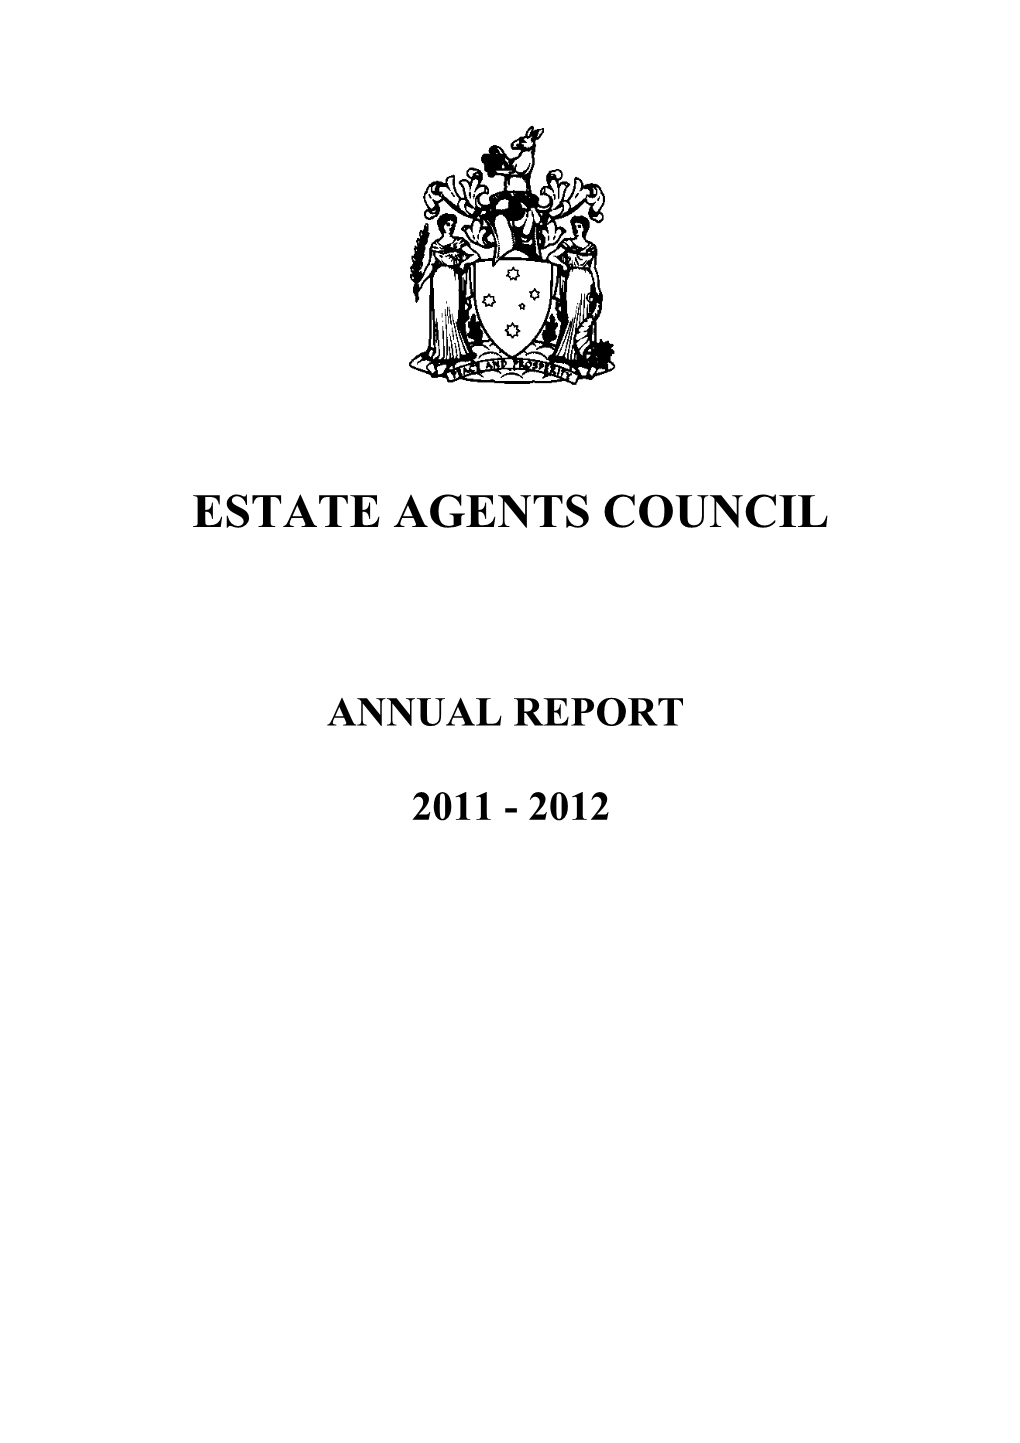 Estate Agents Council Annual Report 2011-12